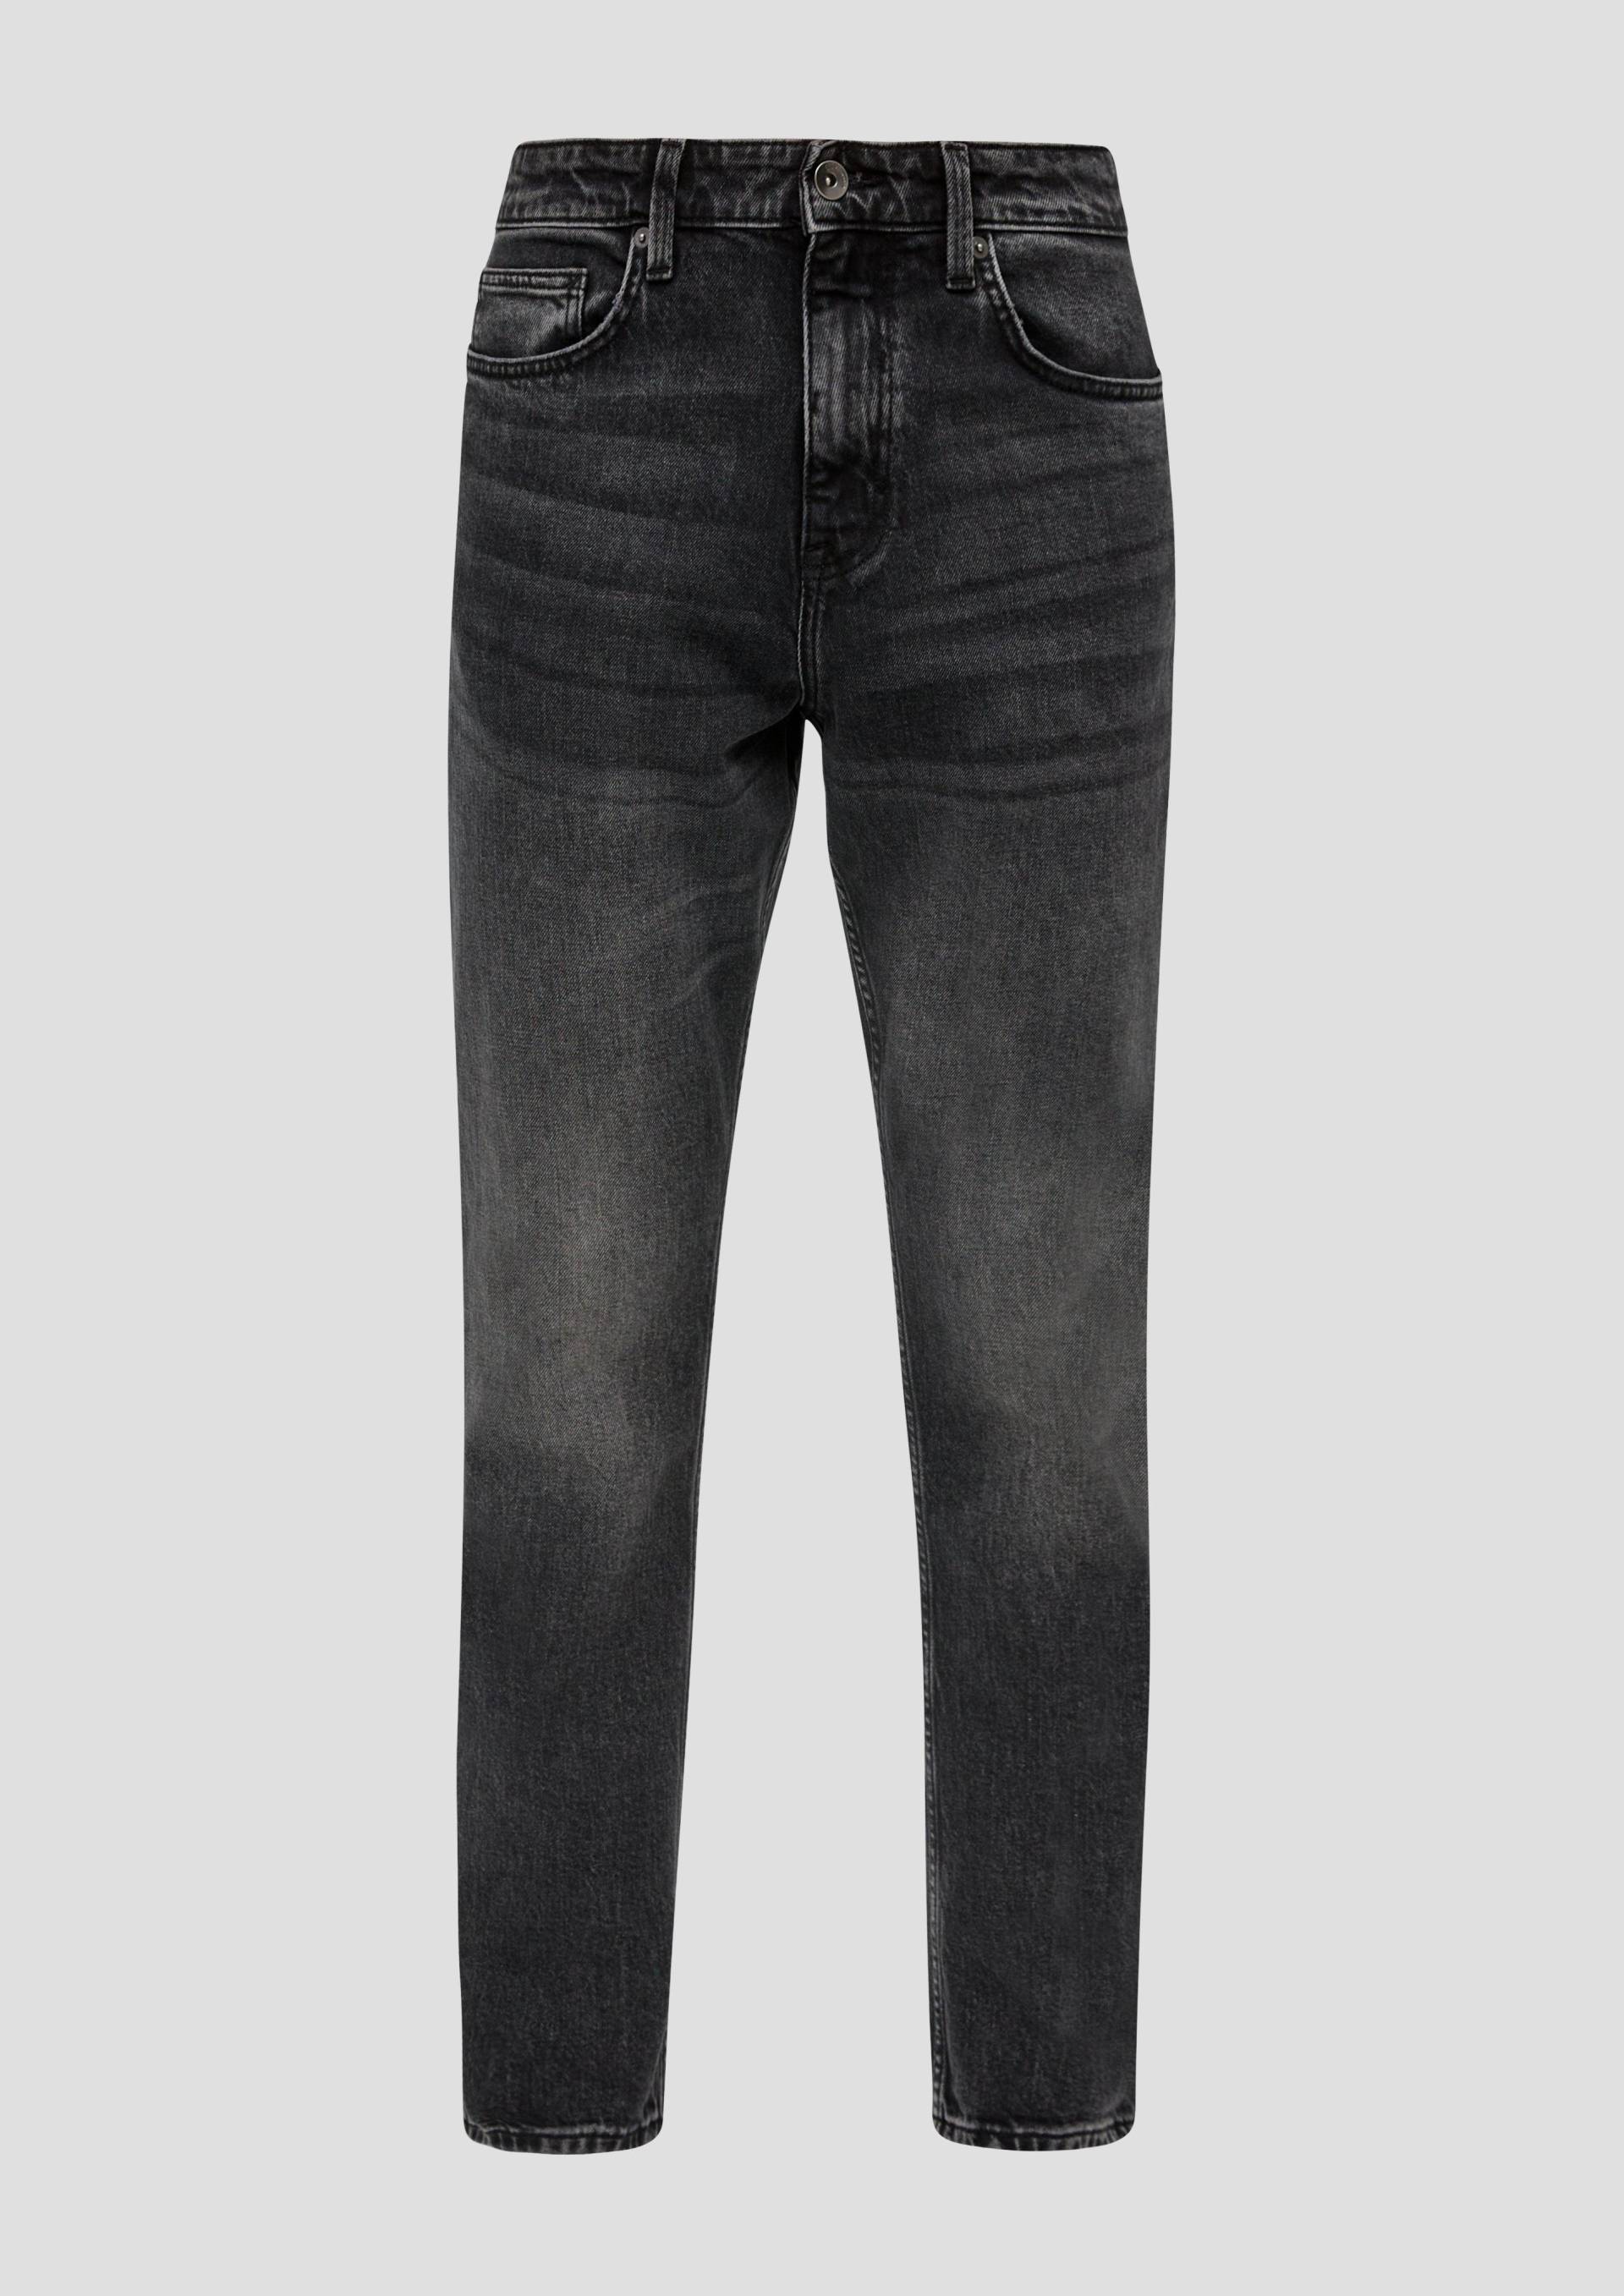 QS - Jeans Pete / Regular Fit / Mid Rise / Straight Leg, Herren, grau von QS